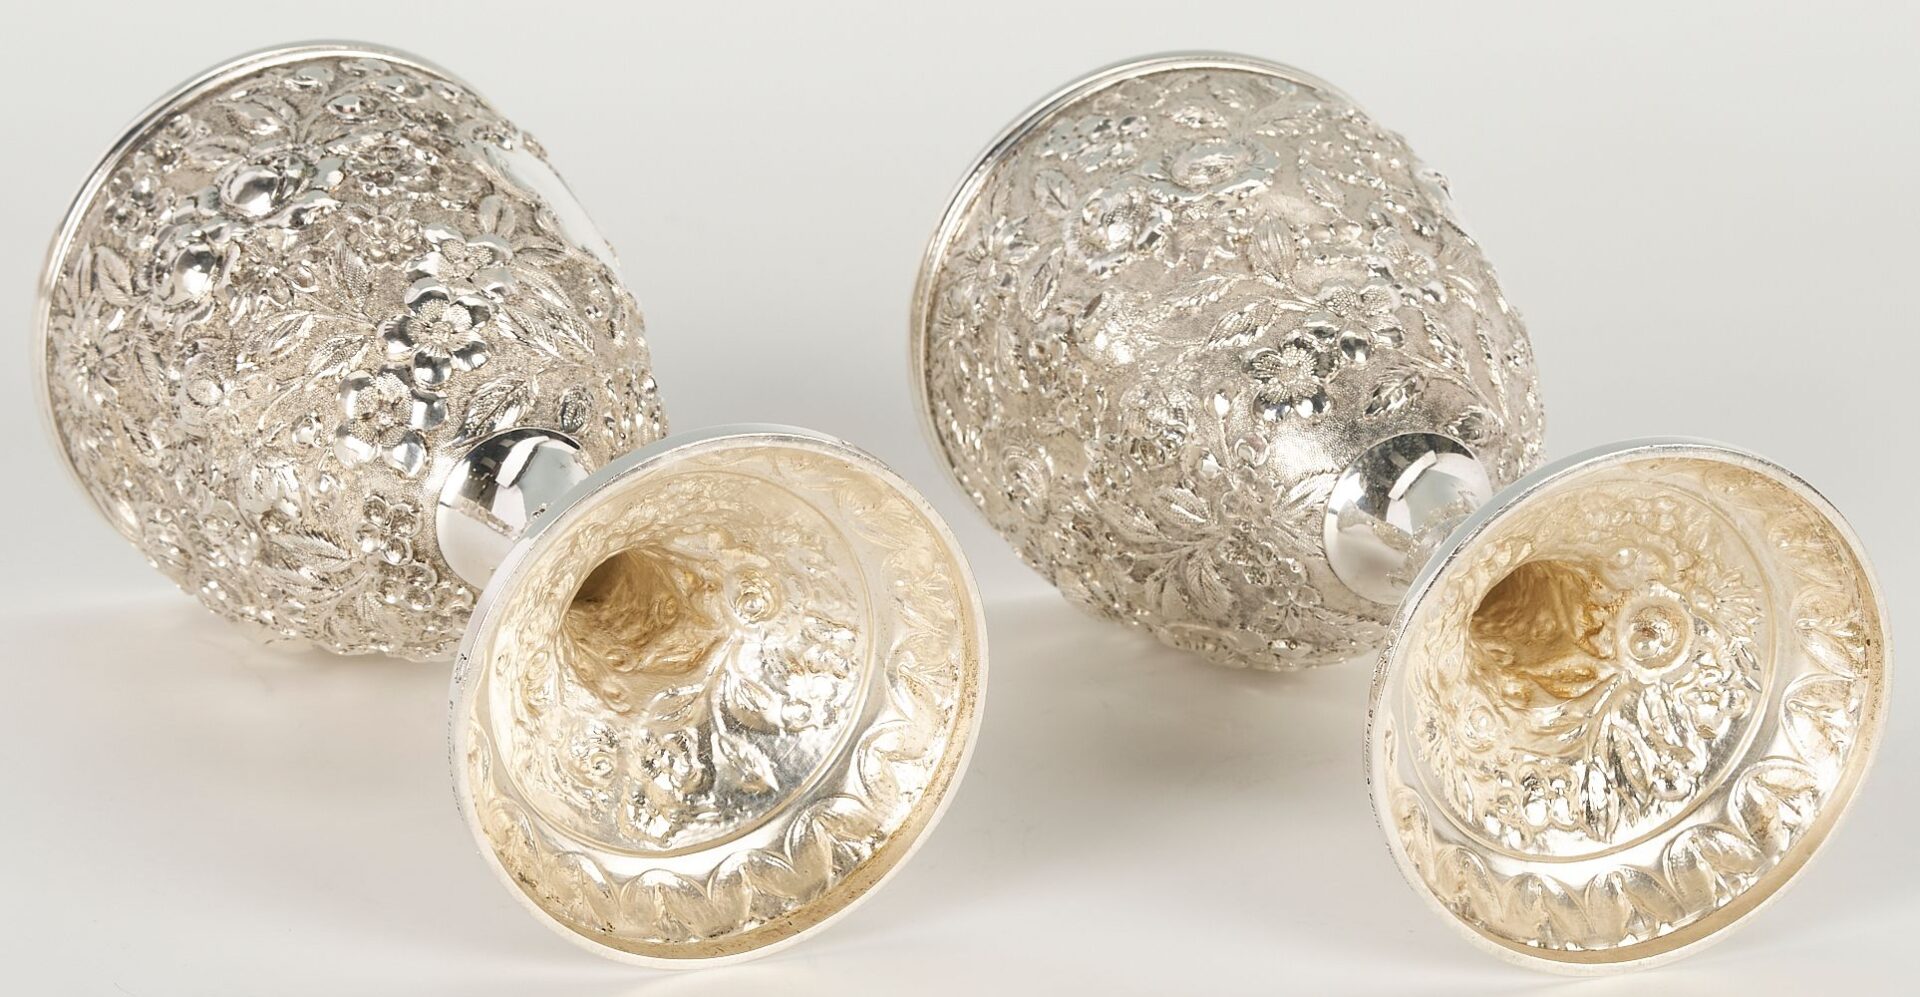 Lot 53: Set of 12 A.G. Schultz & Co. Sterling Silver Repousse Goblets